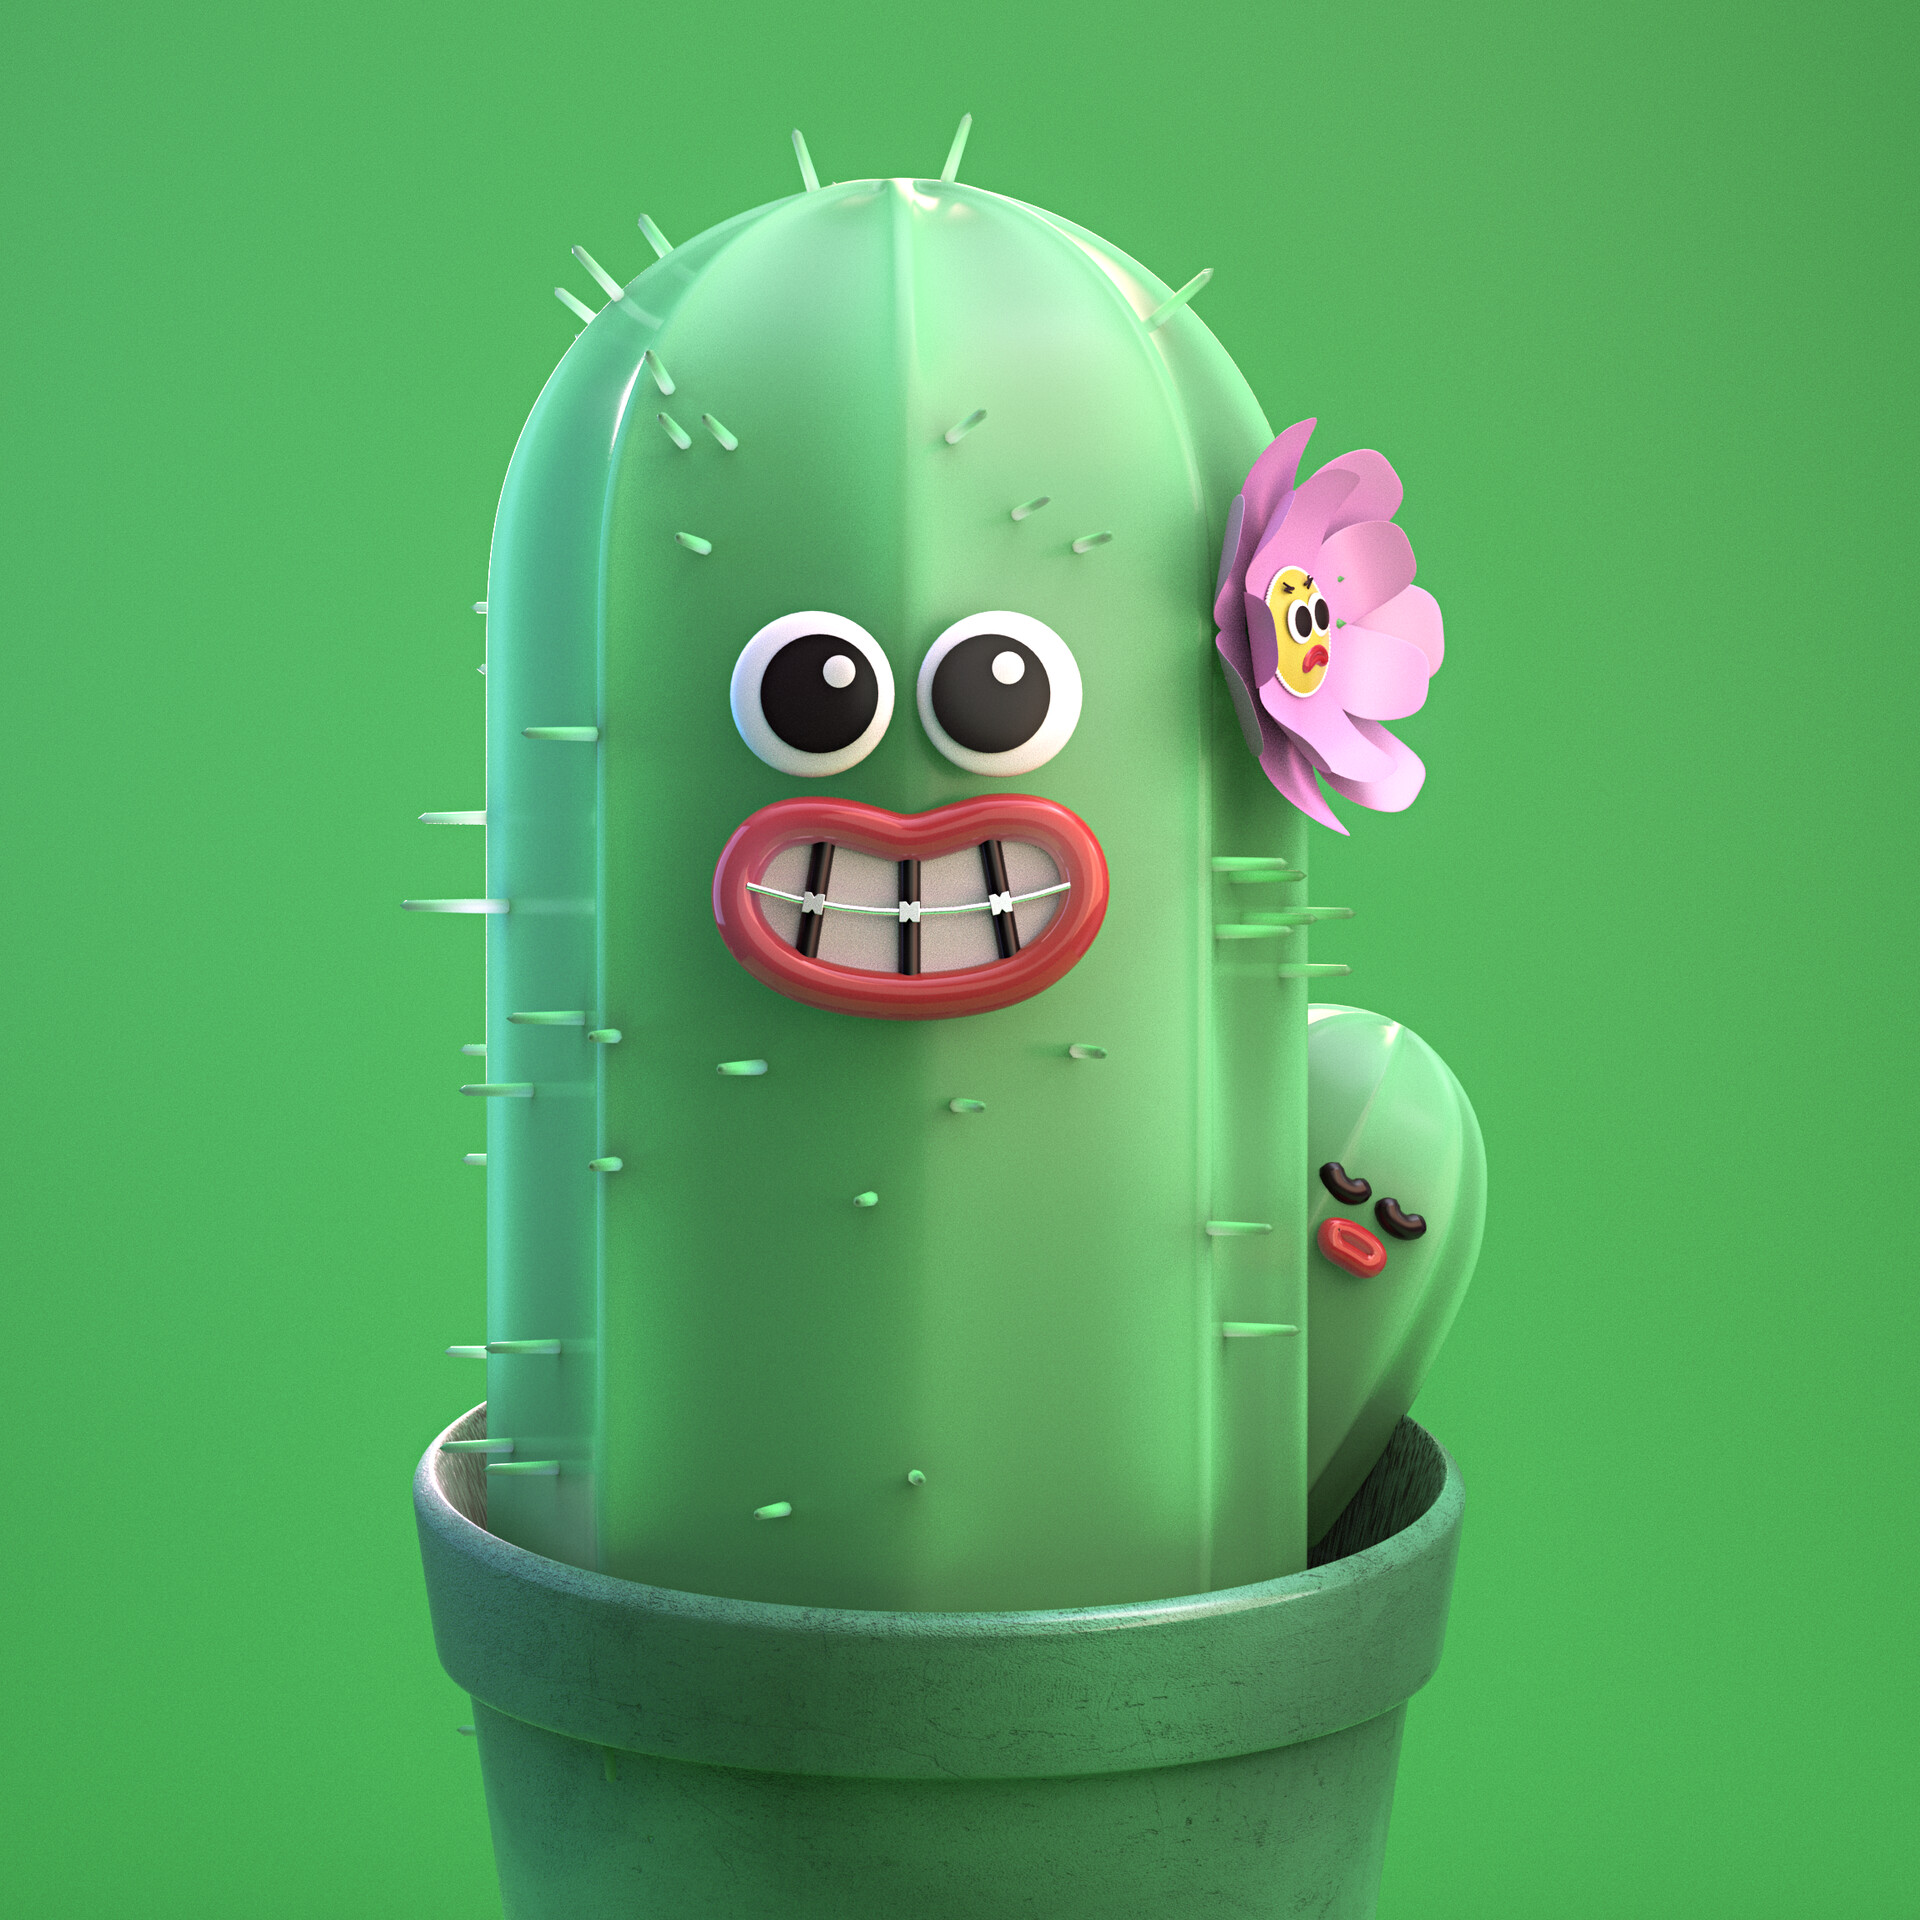 Just a cute little cactus. 